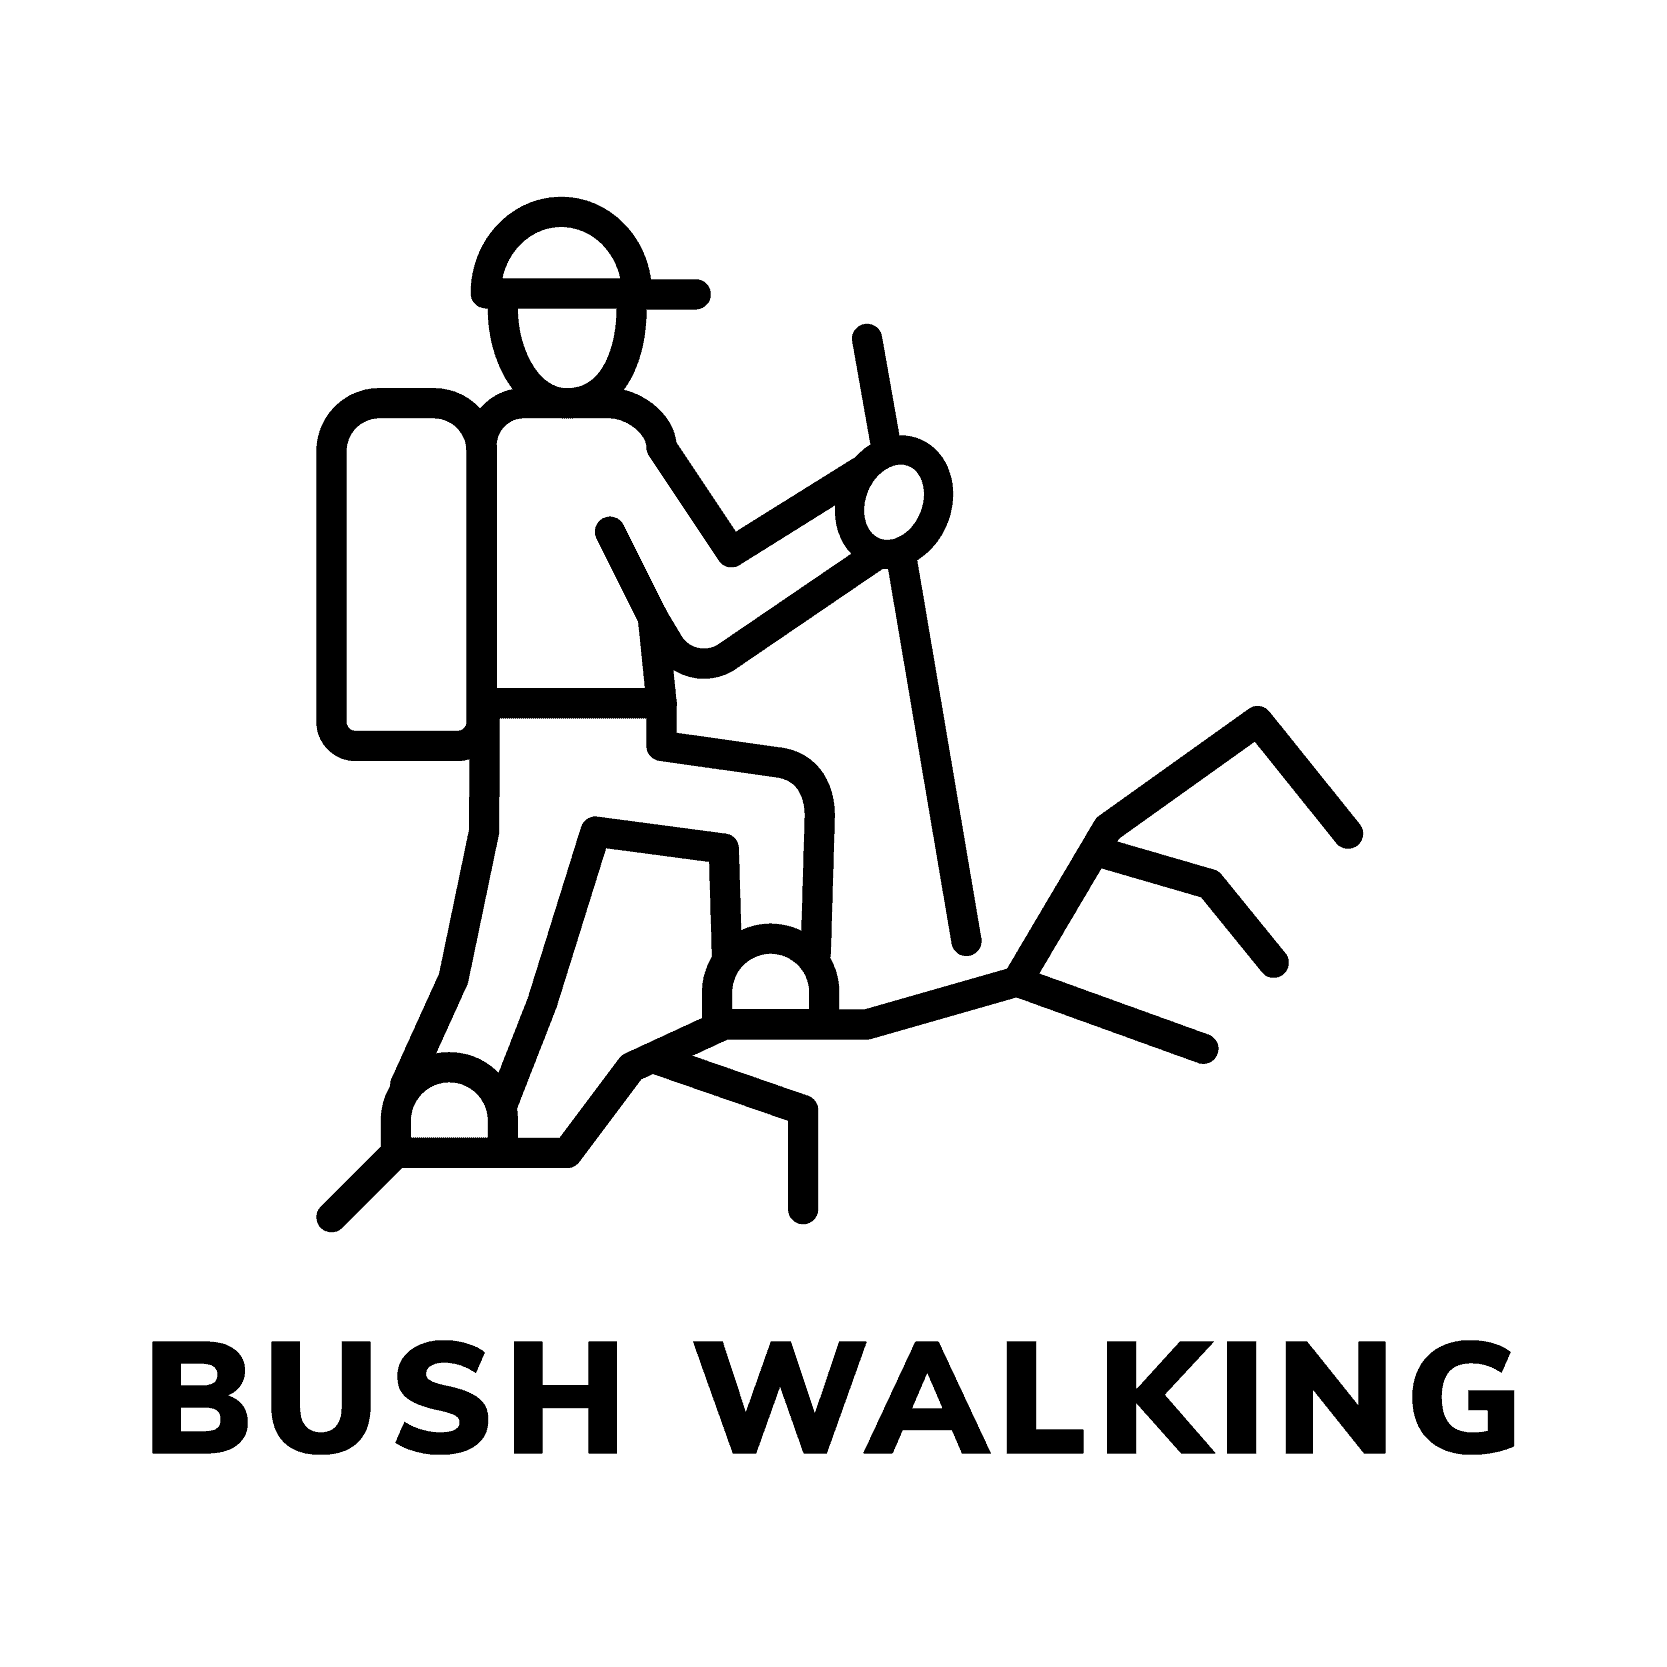 Bush walking badge